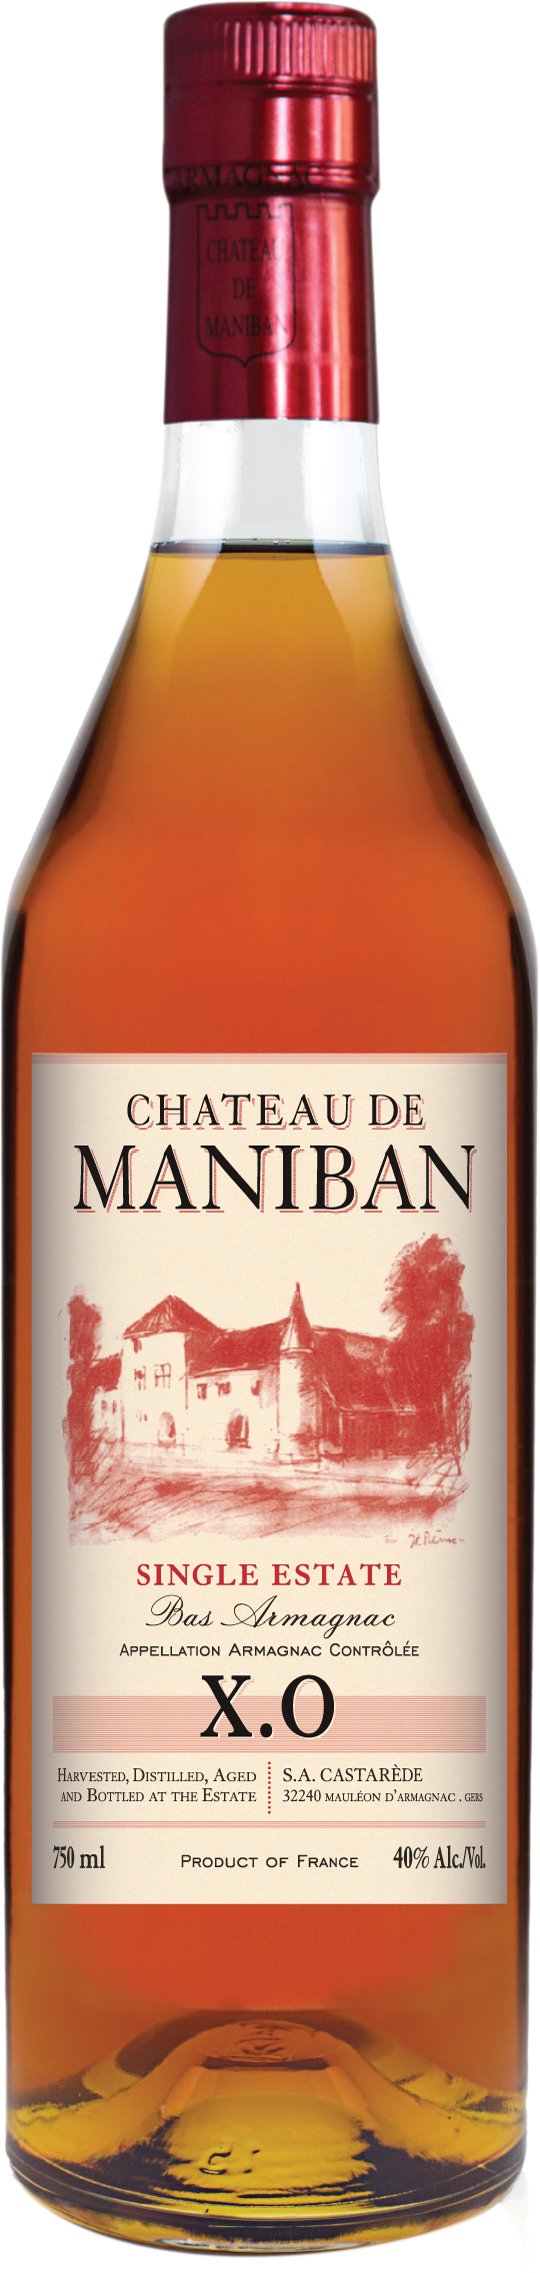 Chateau de Maniban XO Bas Armagnac